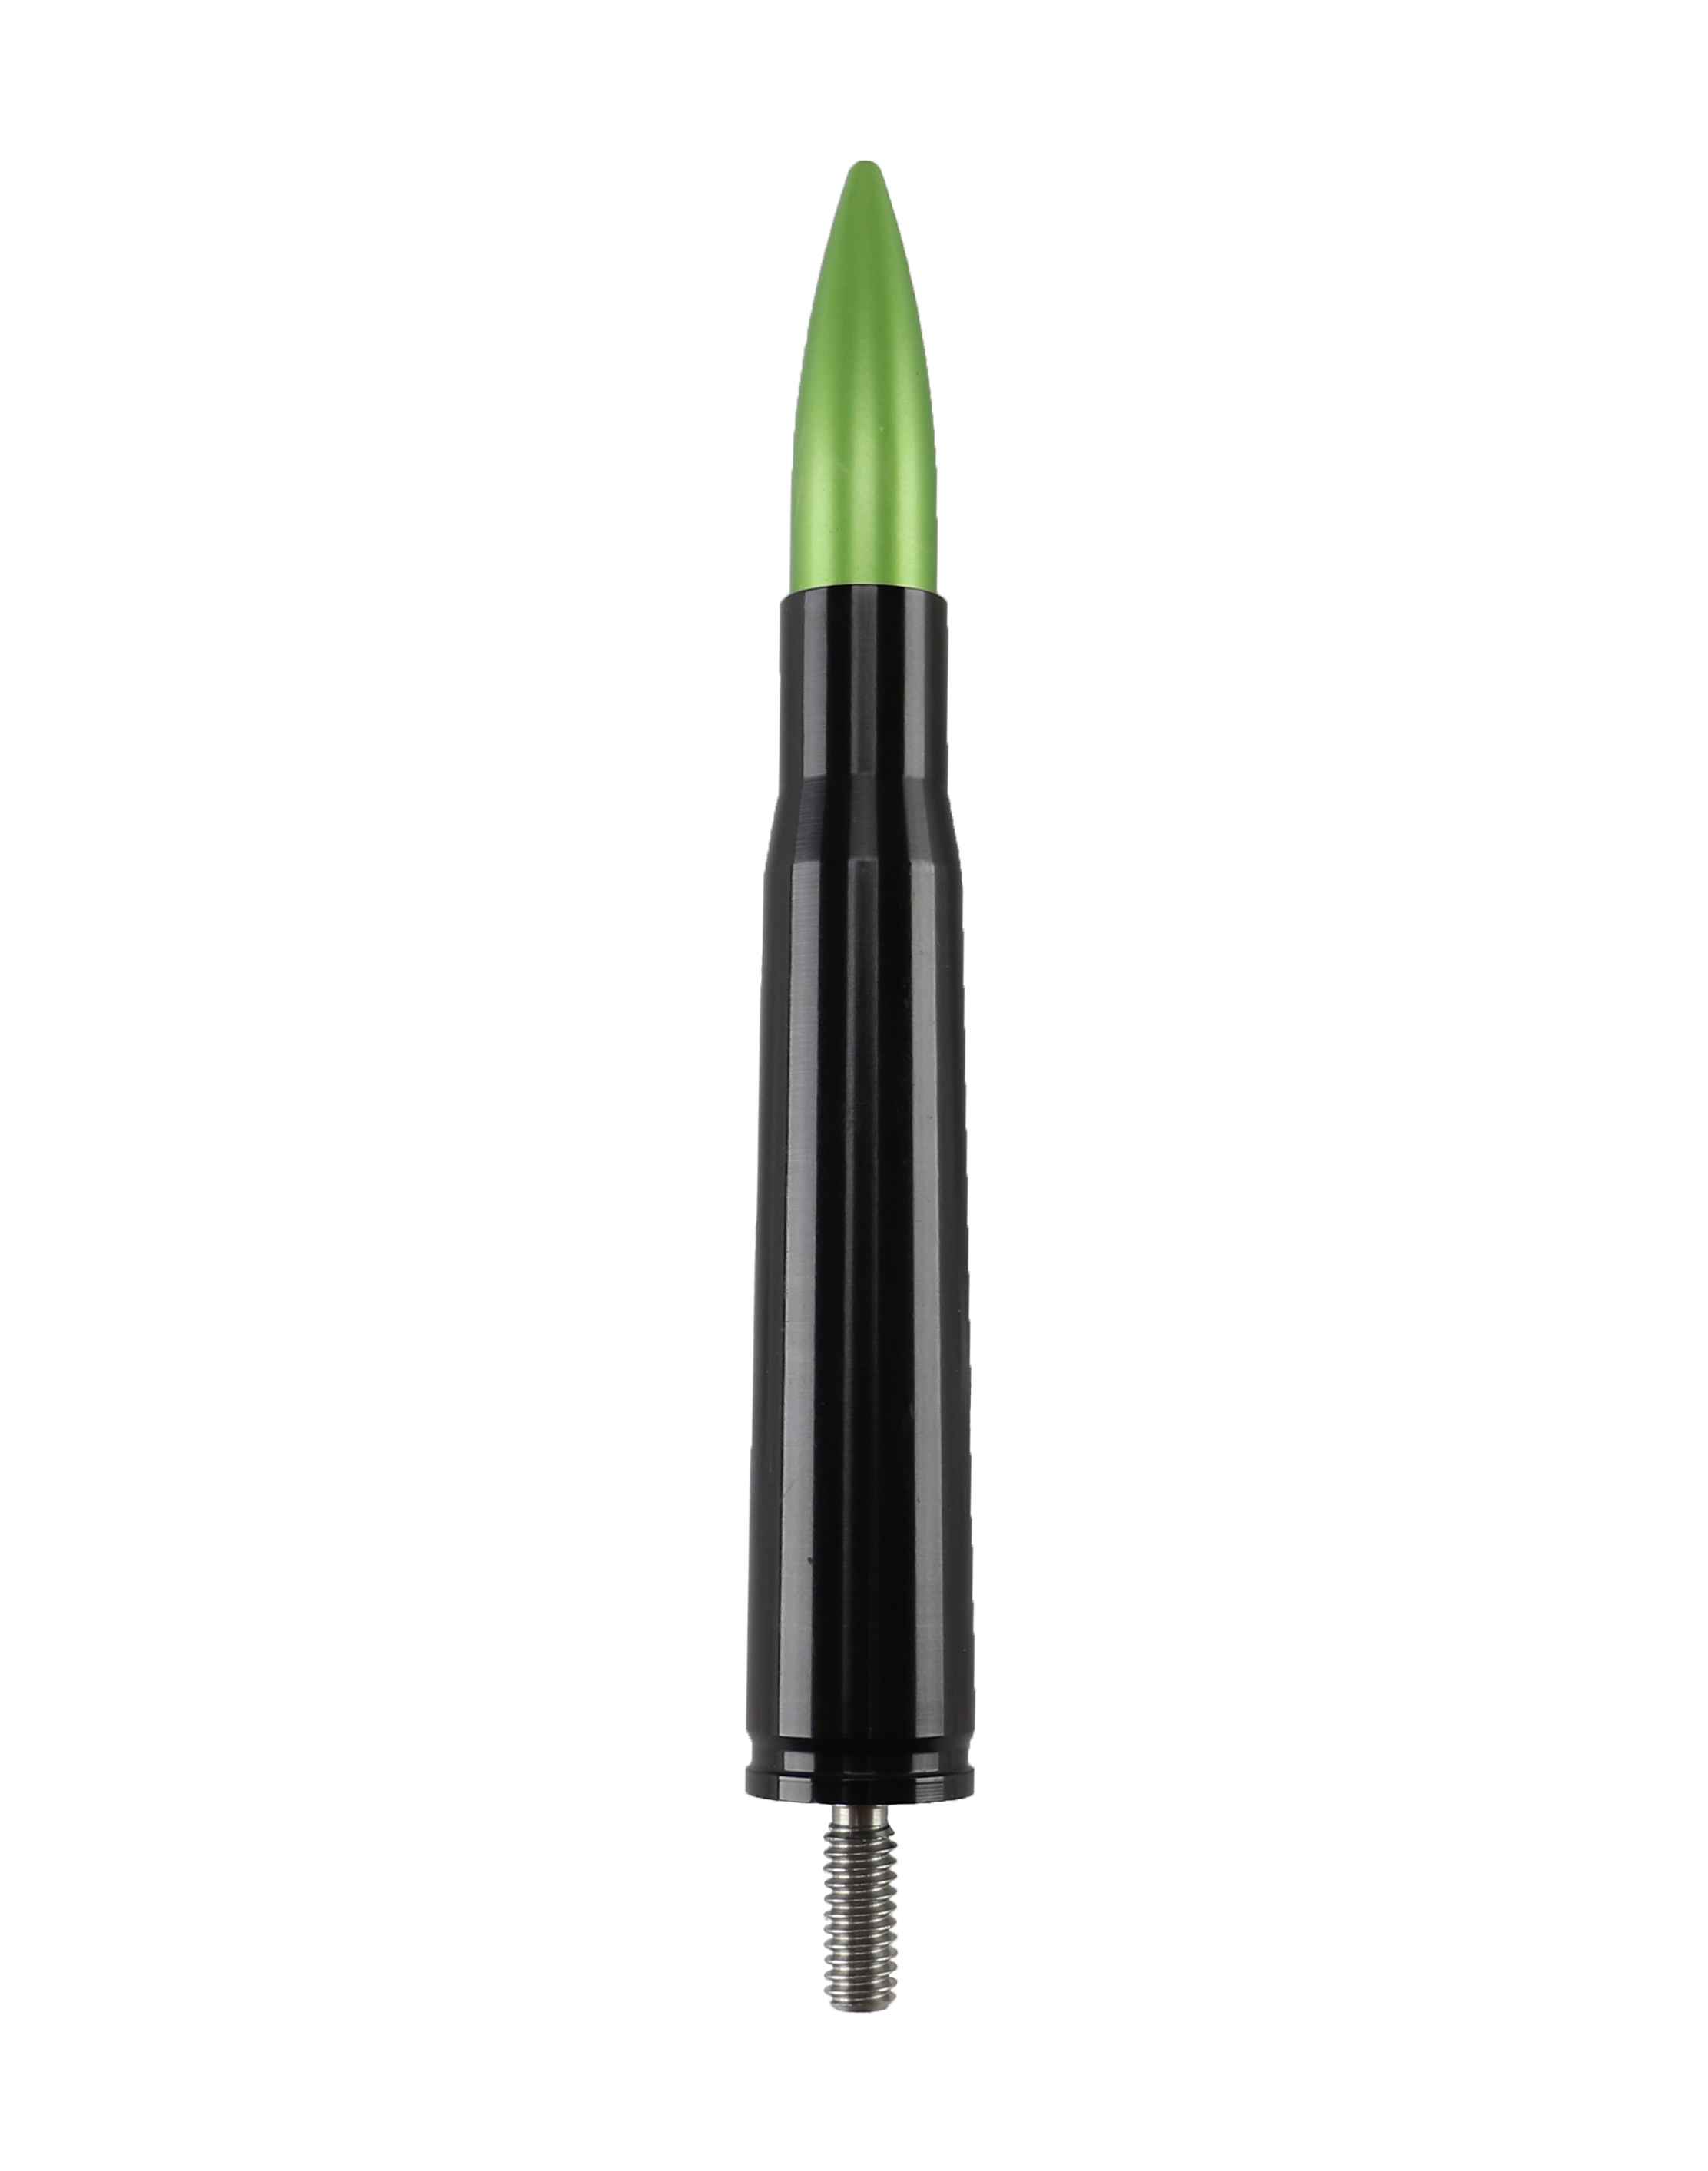 Votex - Made in USA - GREEN 50 Caliber Bullet Aluminum Antenna - Part Number A435-GREEN-HHU